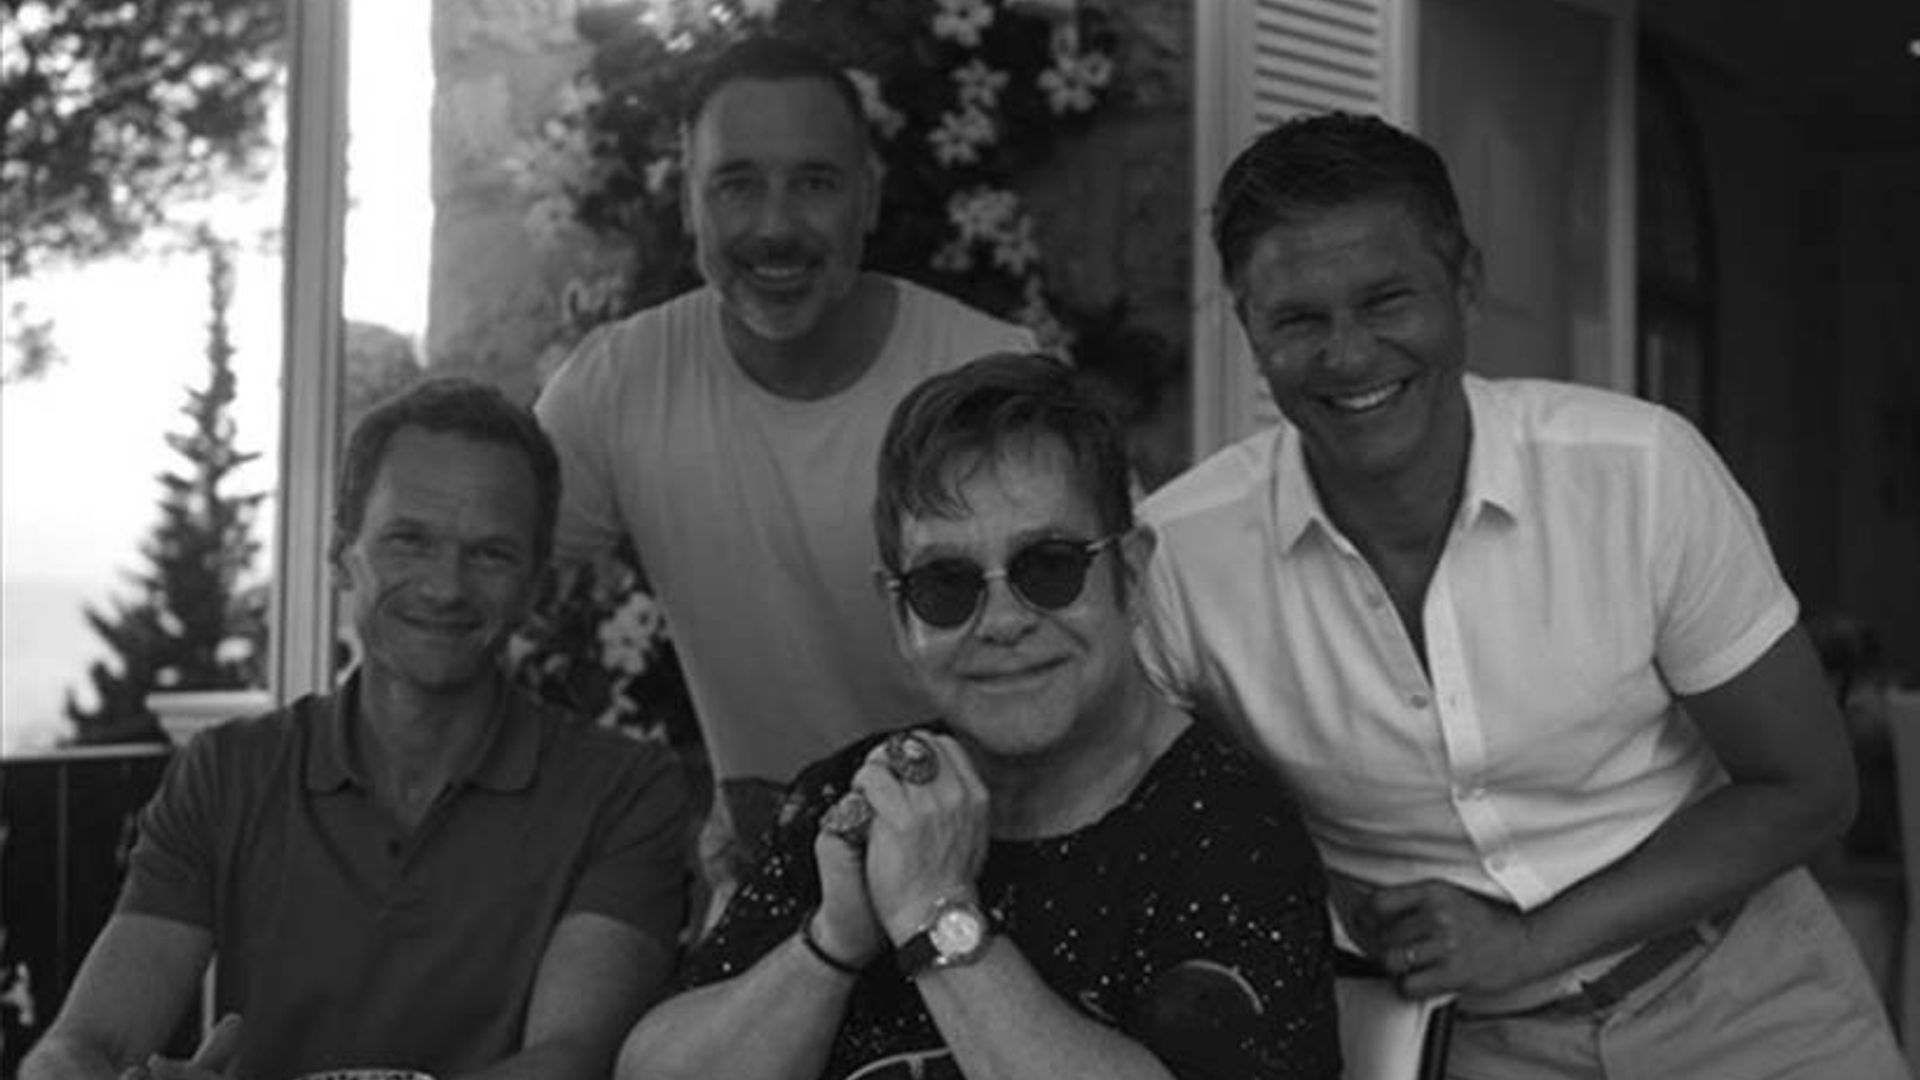 Sir Elton John and David Furnish enjoy star-studded holiday in Nice